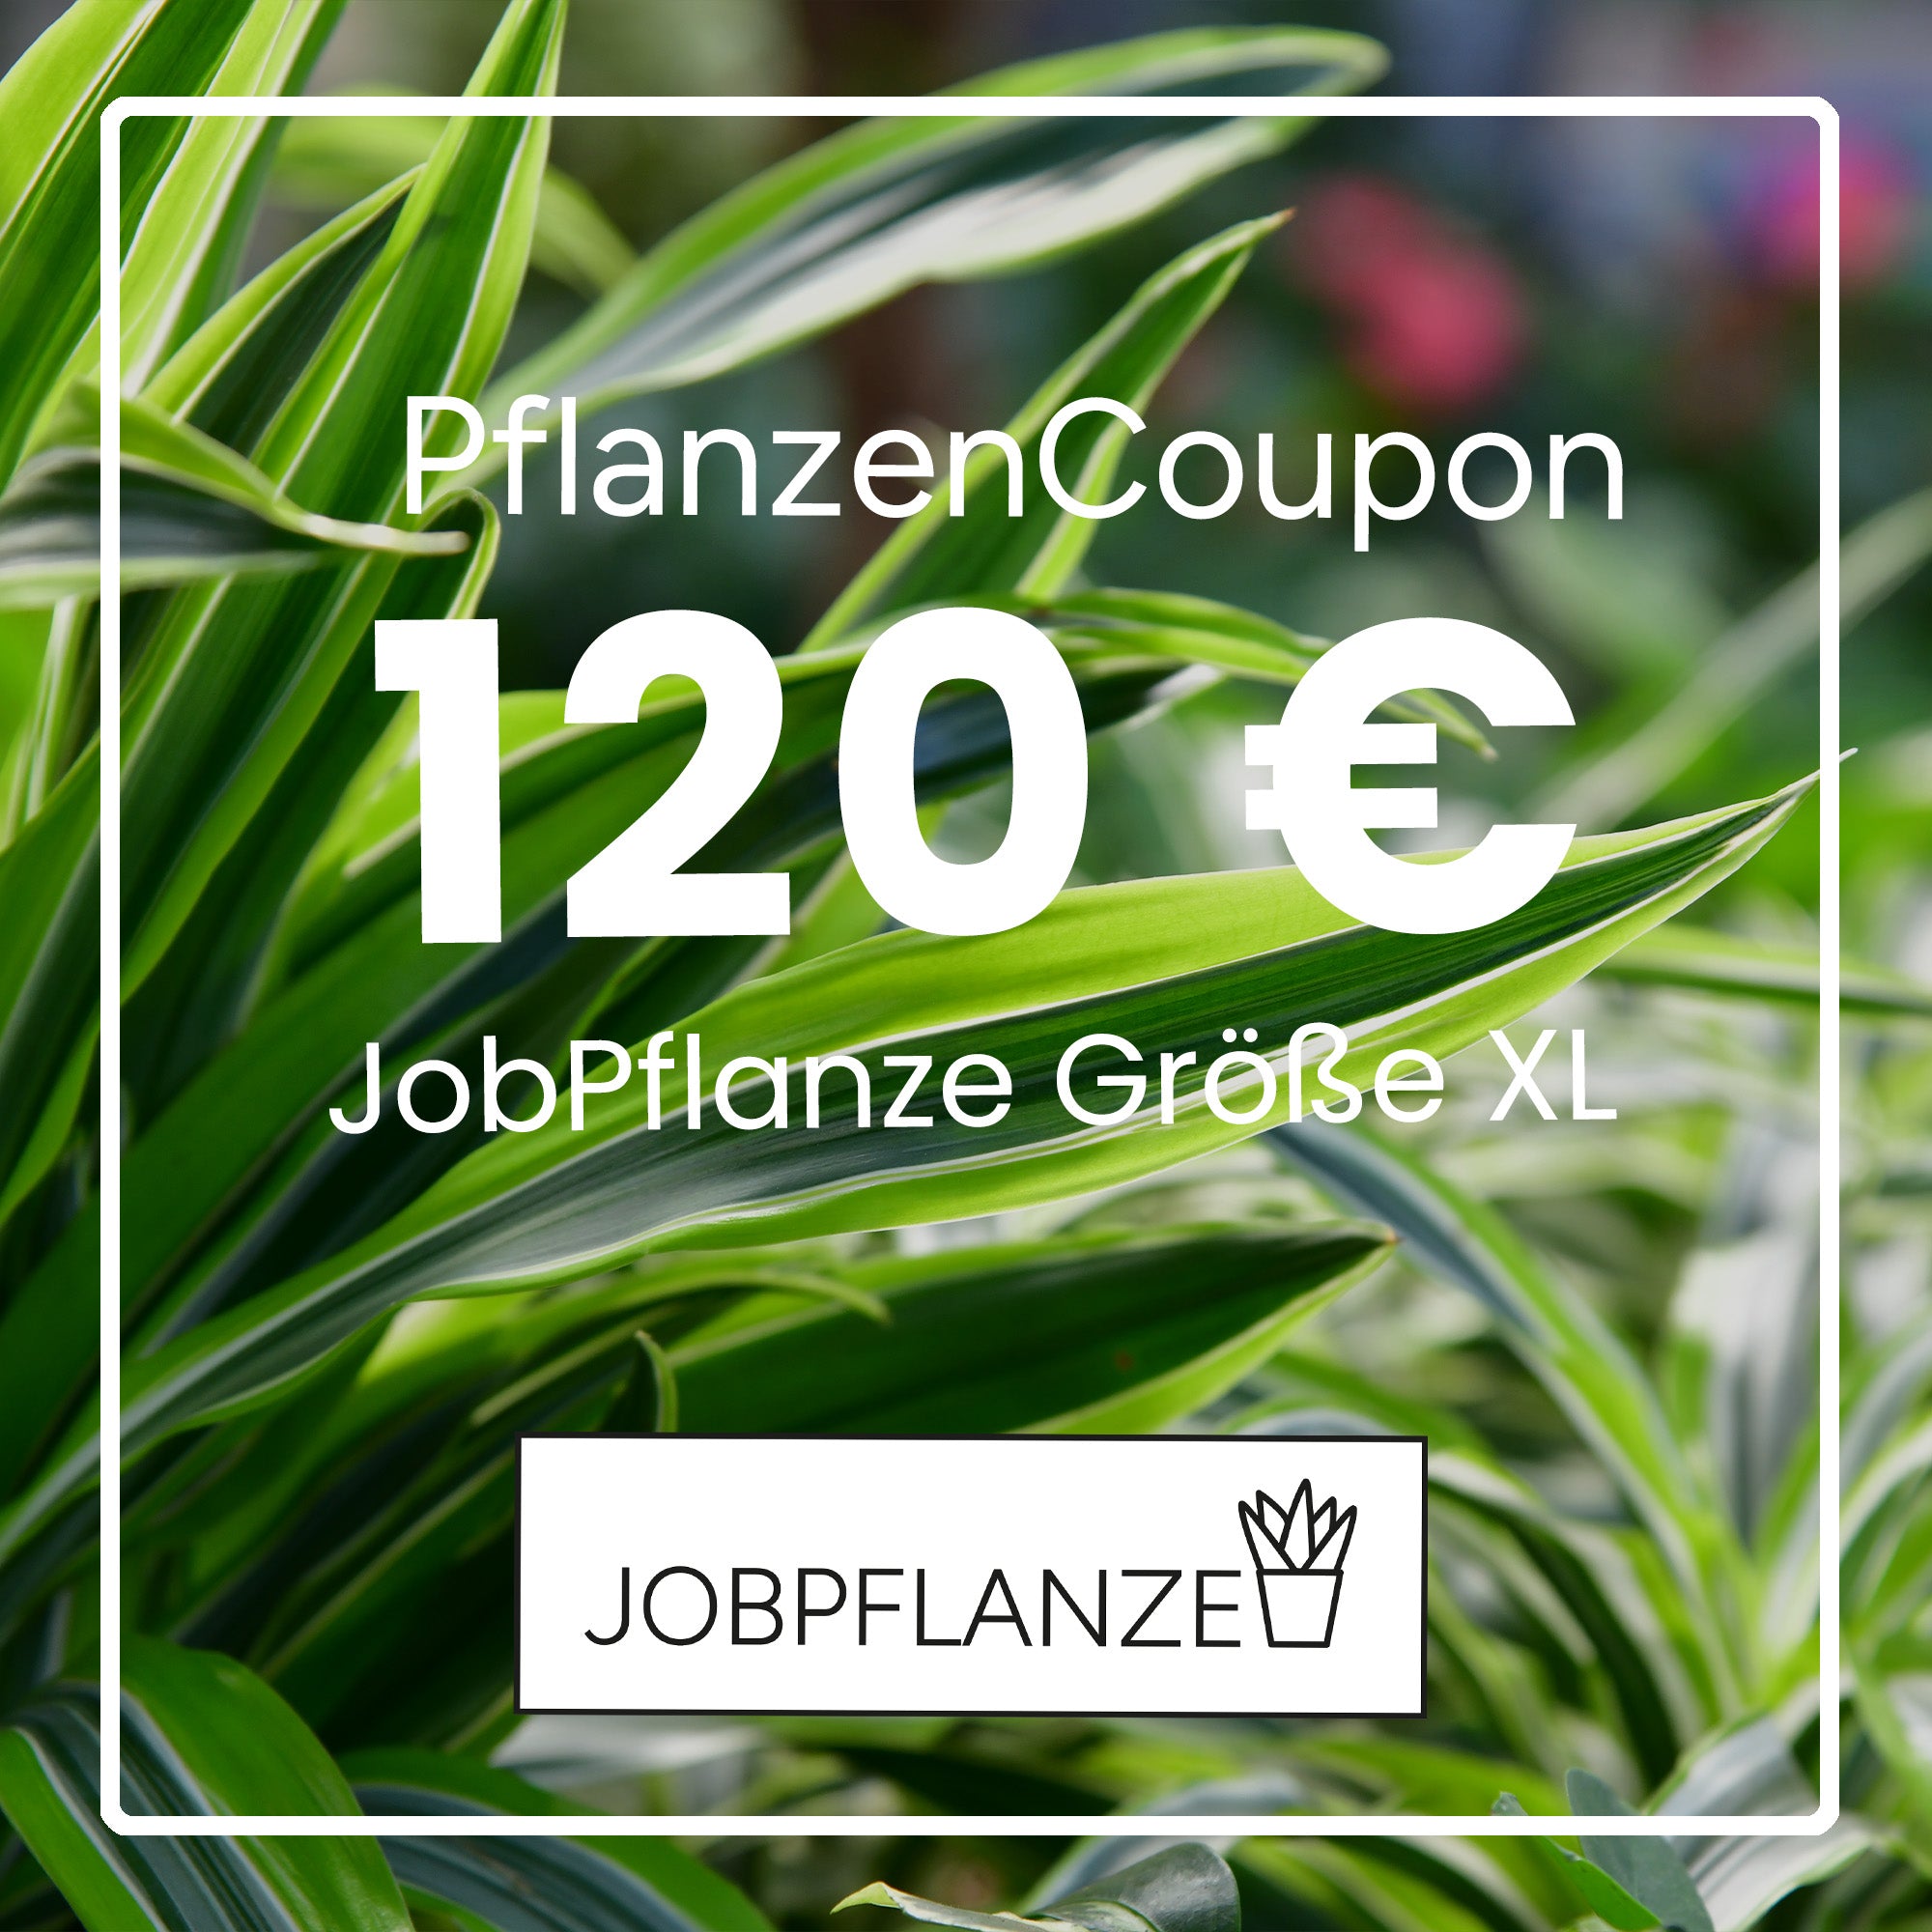 JobPflanze Coupon 120€